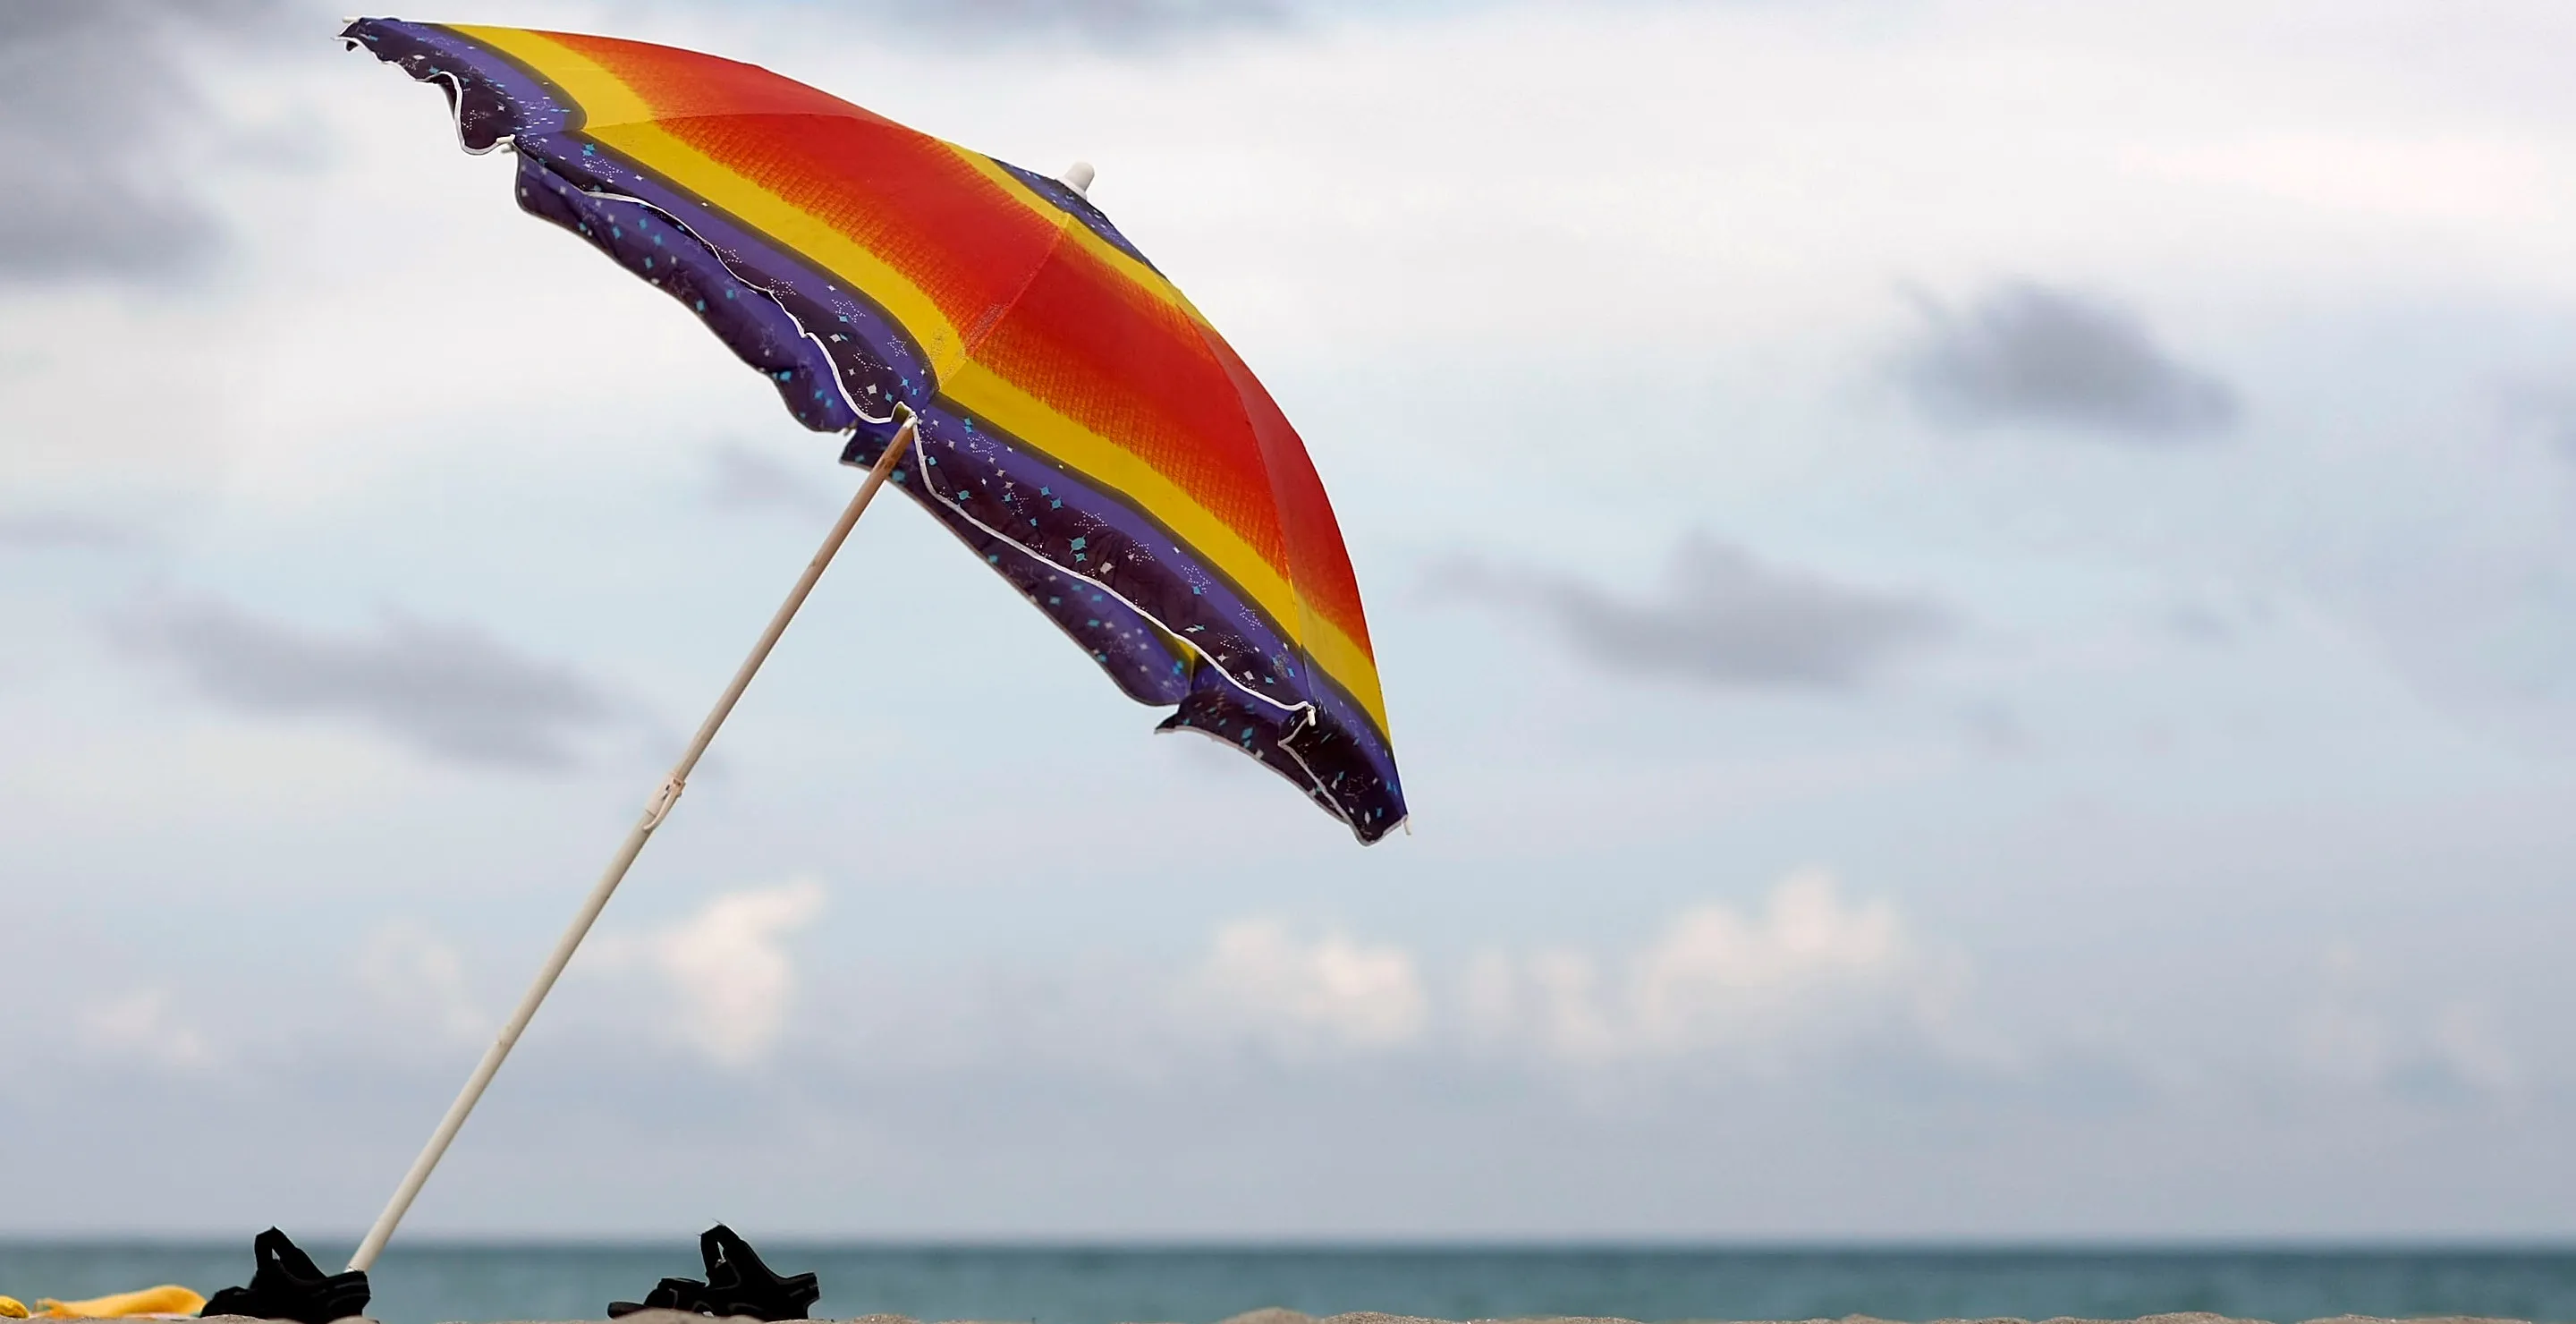 Beachgoer Impaled By Umbrella While Sunbathing In Florida In Freak Accident